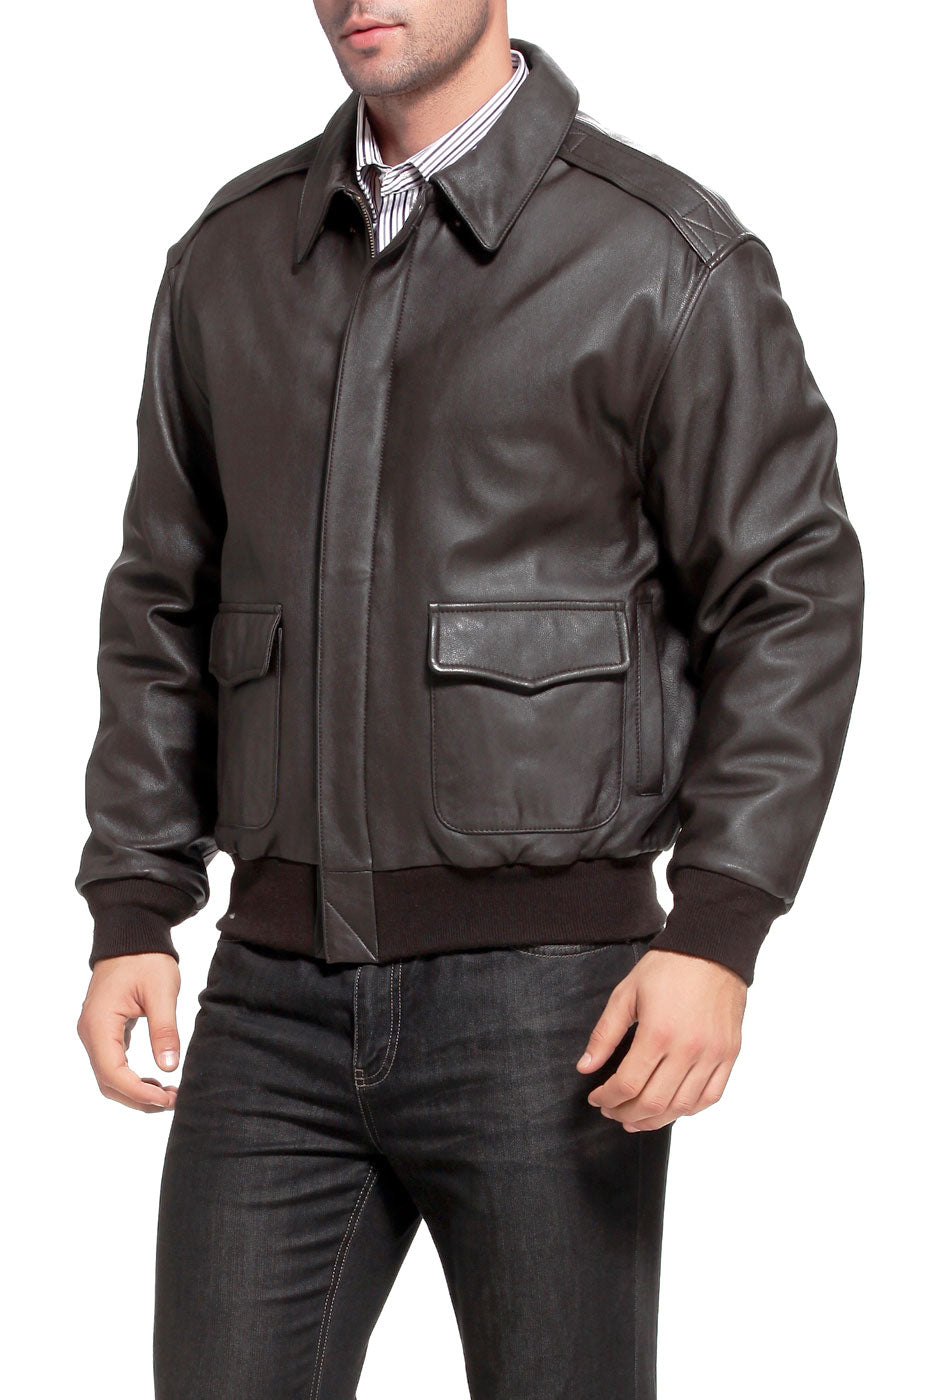 Men's Aviator (Pilot) Leather Jackets in New Zealand »